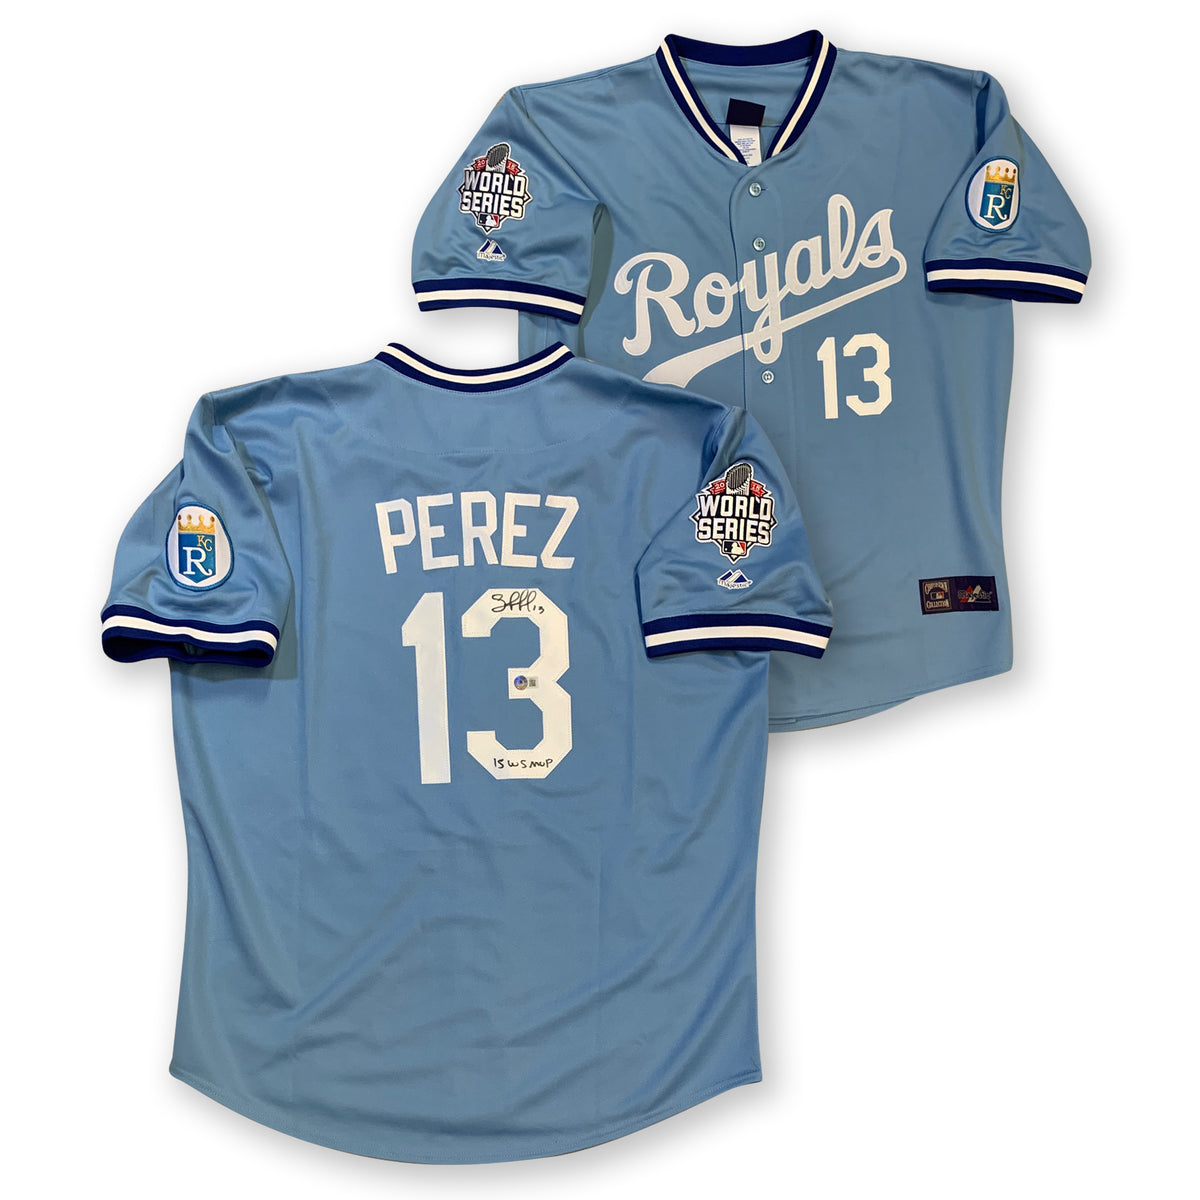 Salvador Perez Royals jersey